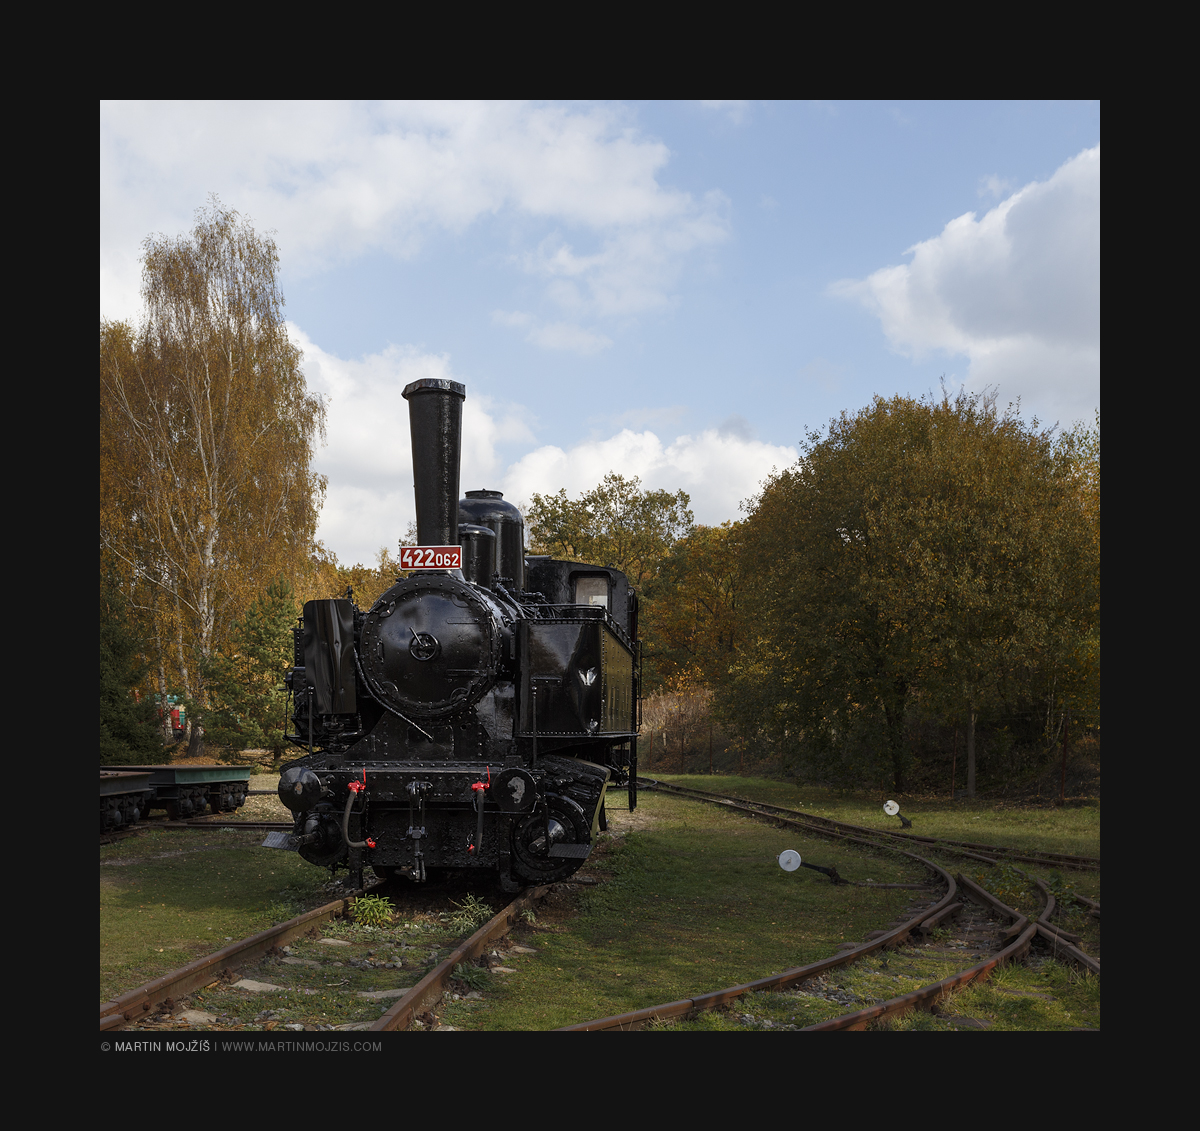 Steam locomotive 422.062.